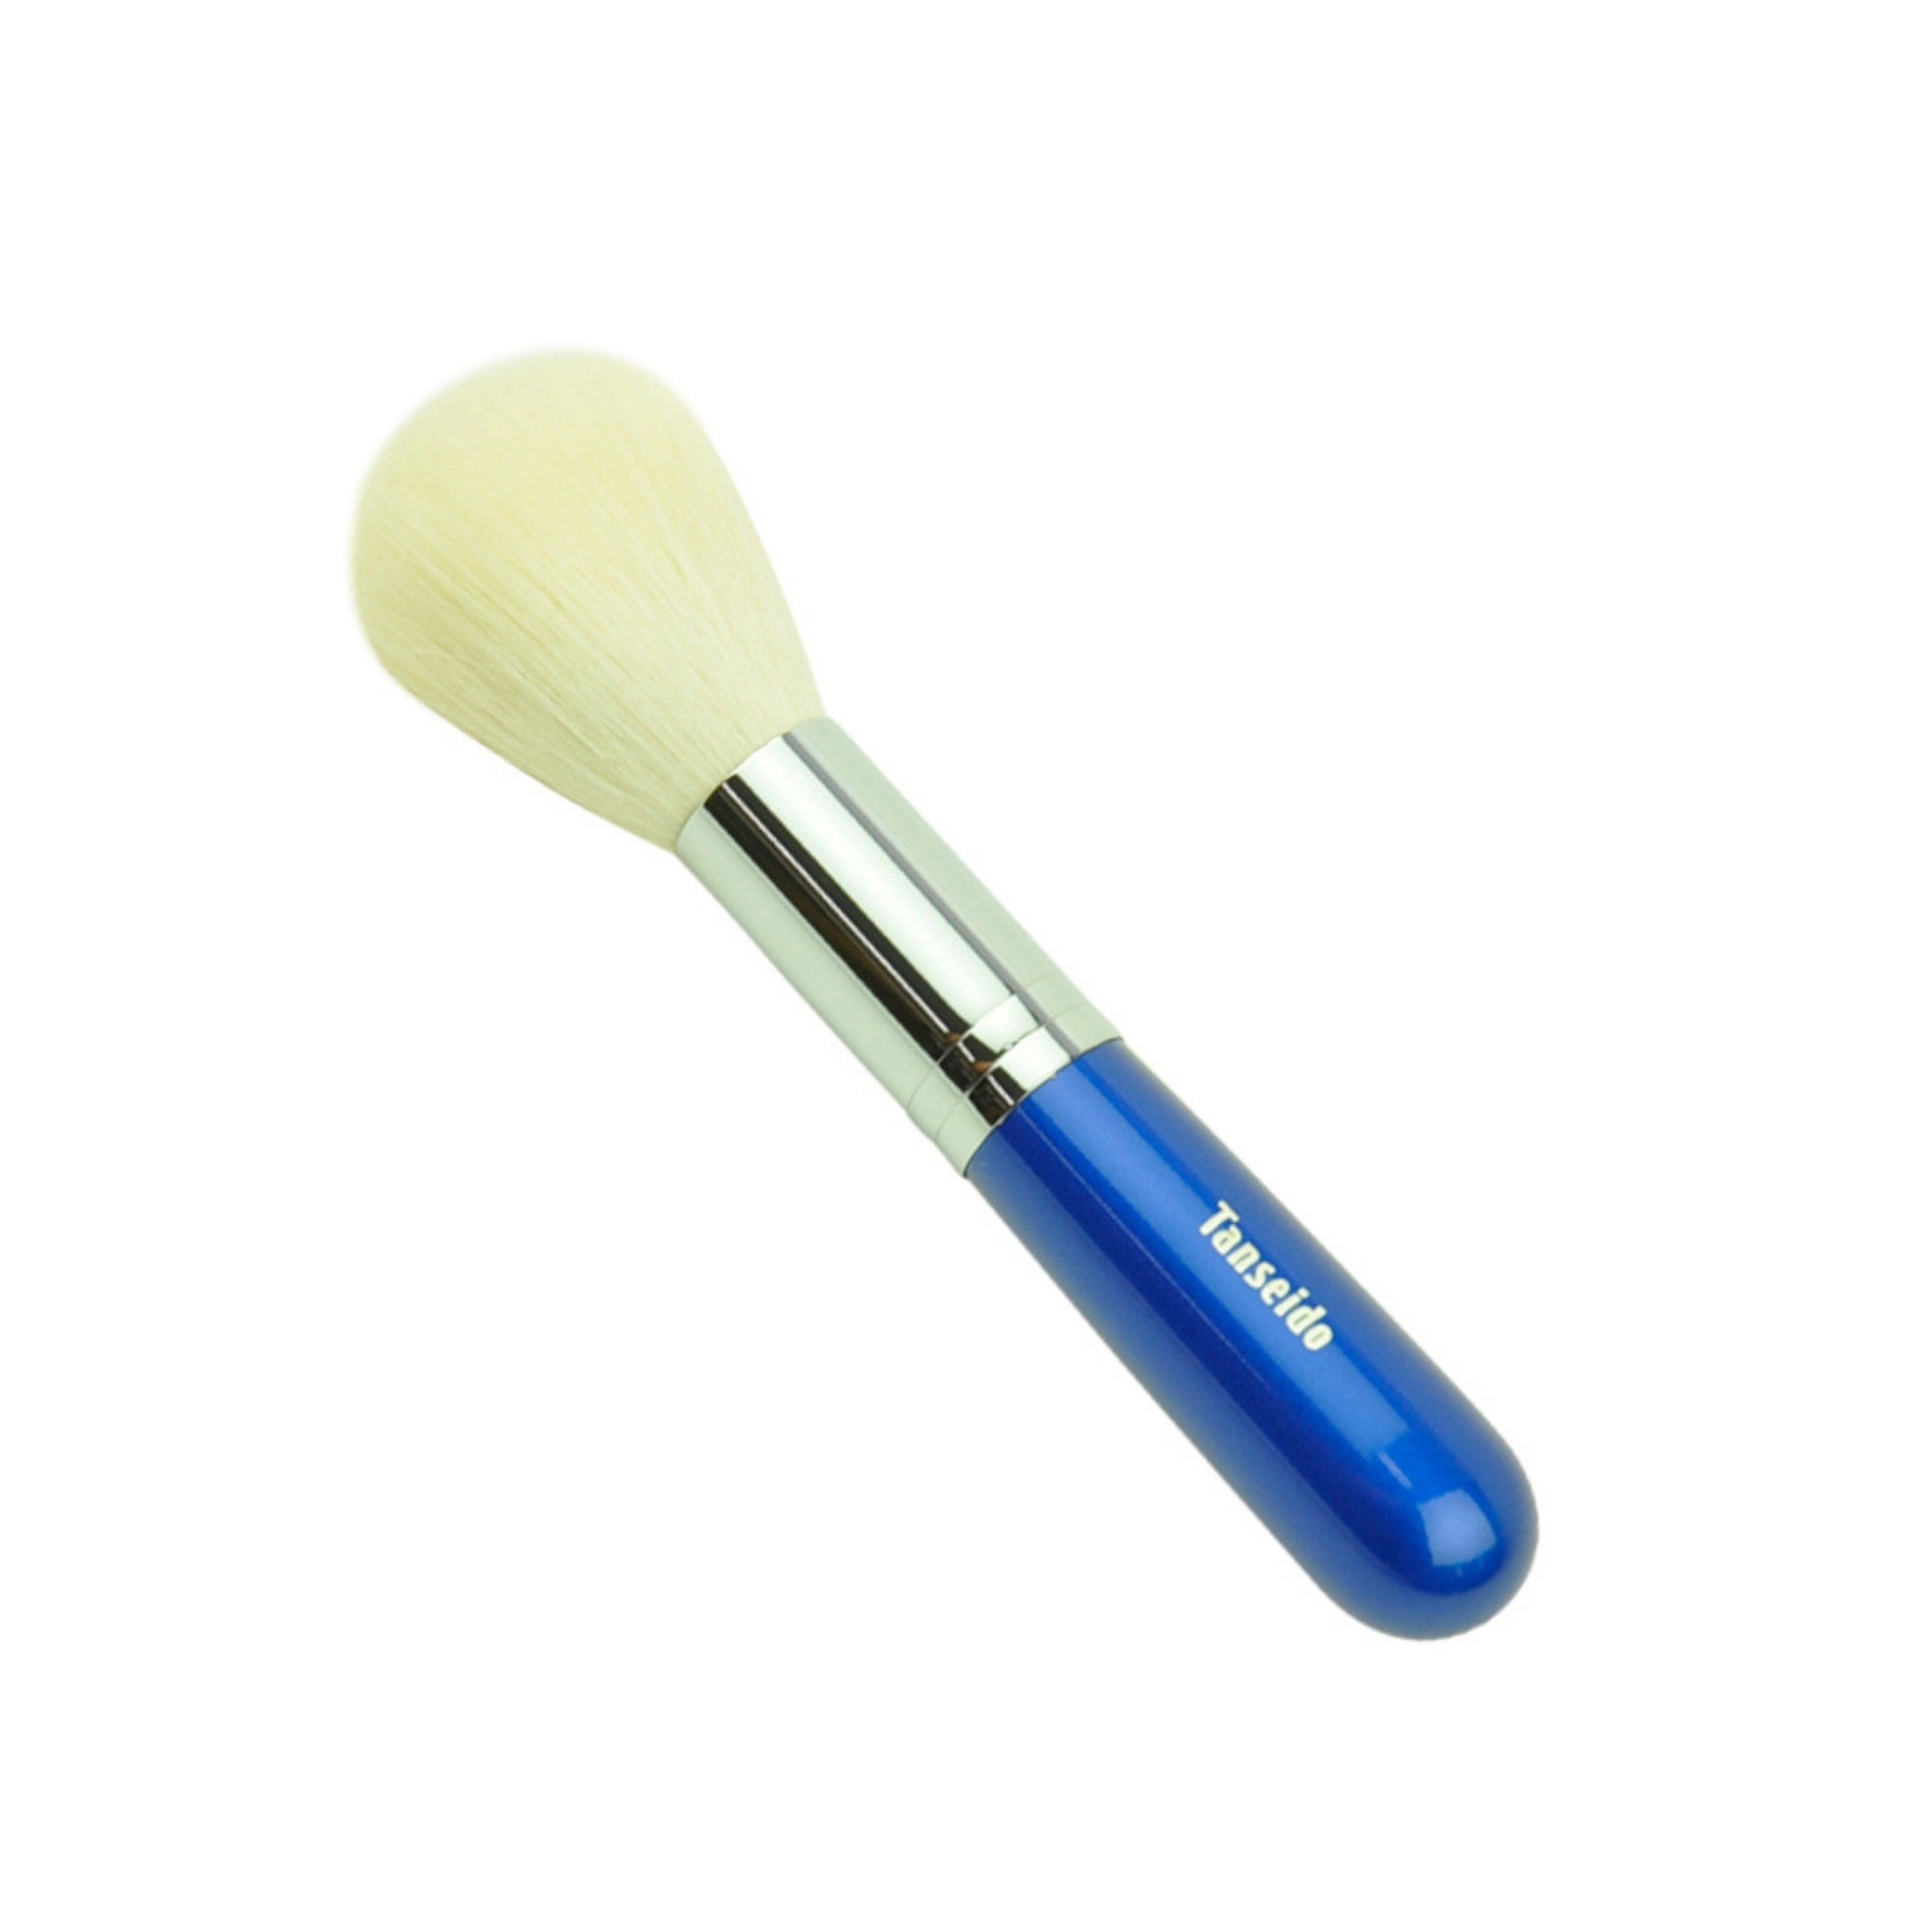 Tanseido JWC20 Cheek Brush - Fude Beauty, Japanese Makeup Brushes